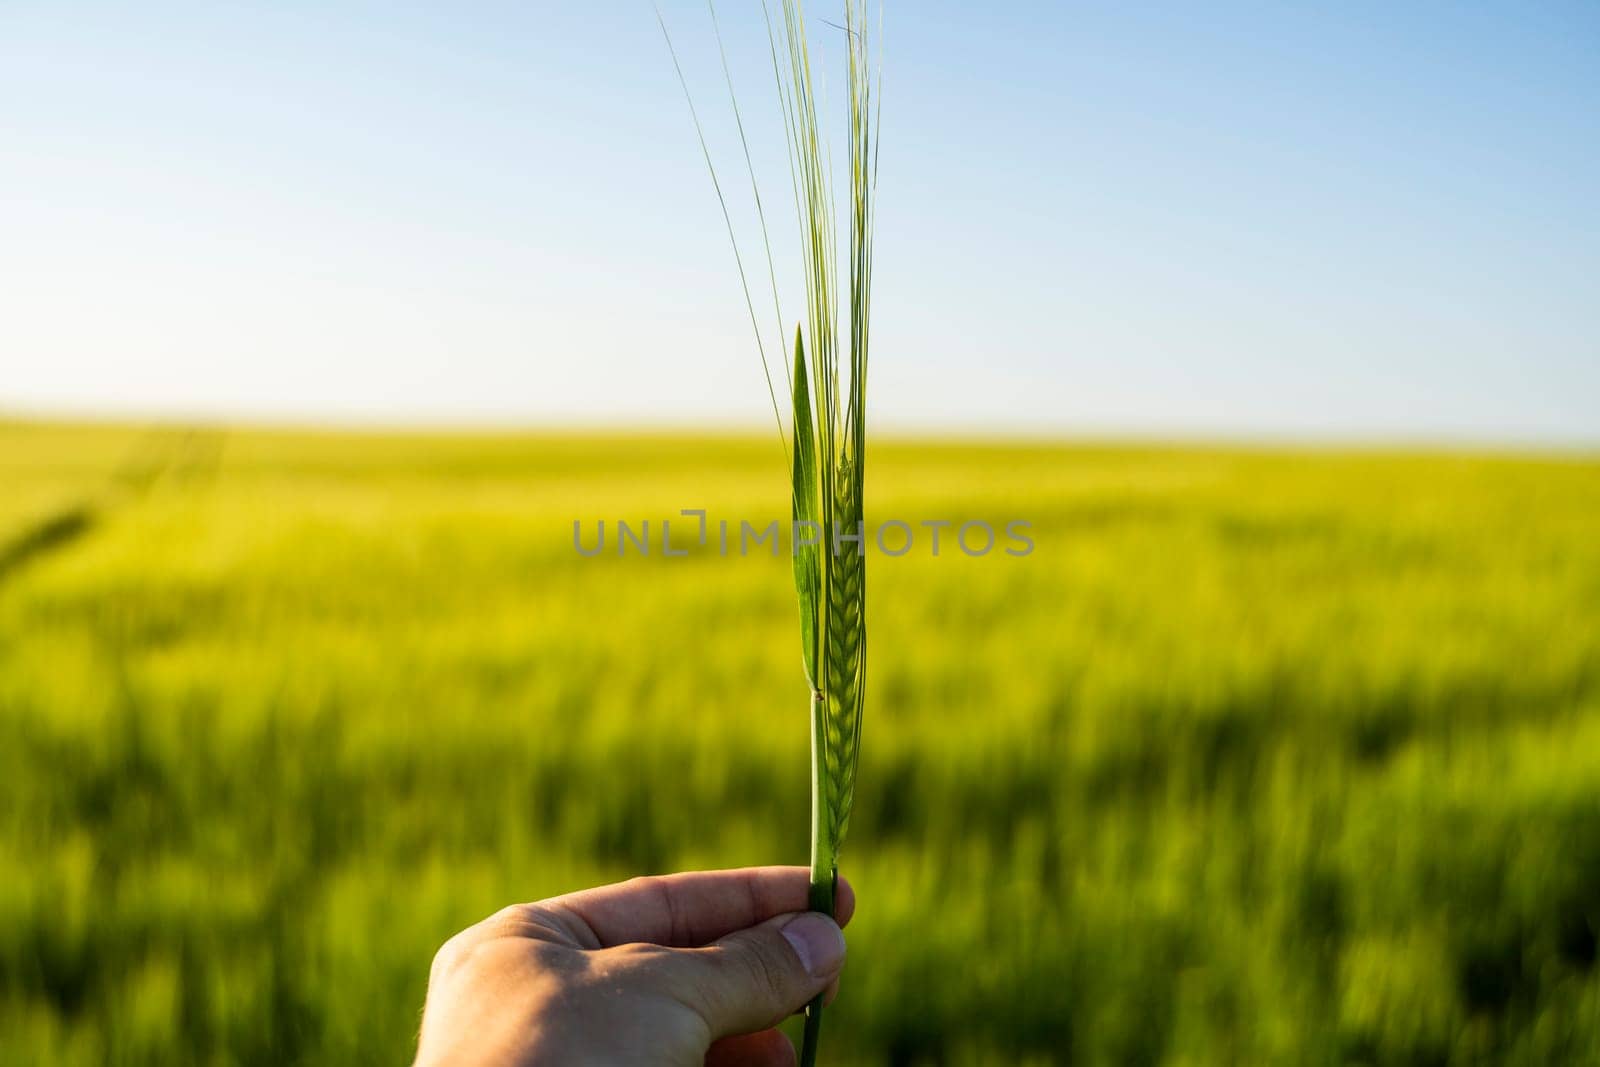 Farmer's holds ears of barley on field under sun, inspecting his harvest. Farmer man walks through wheat field, touching green ears of barley